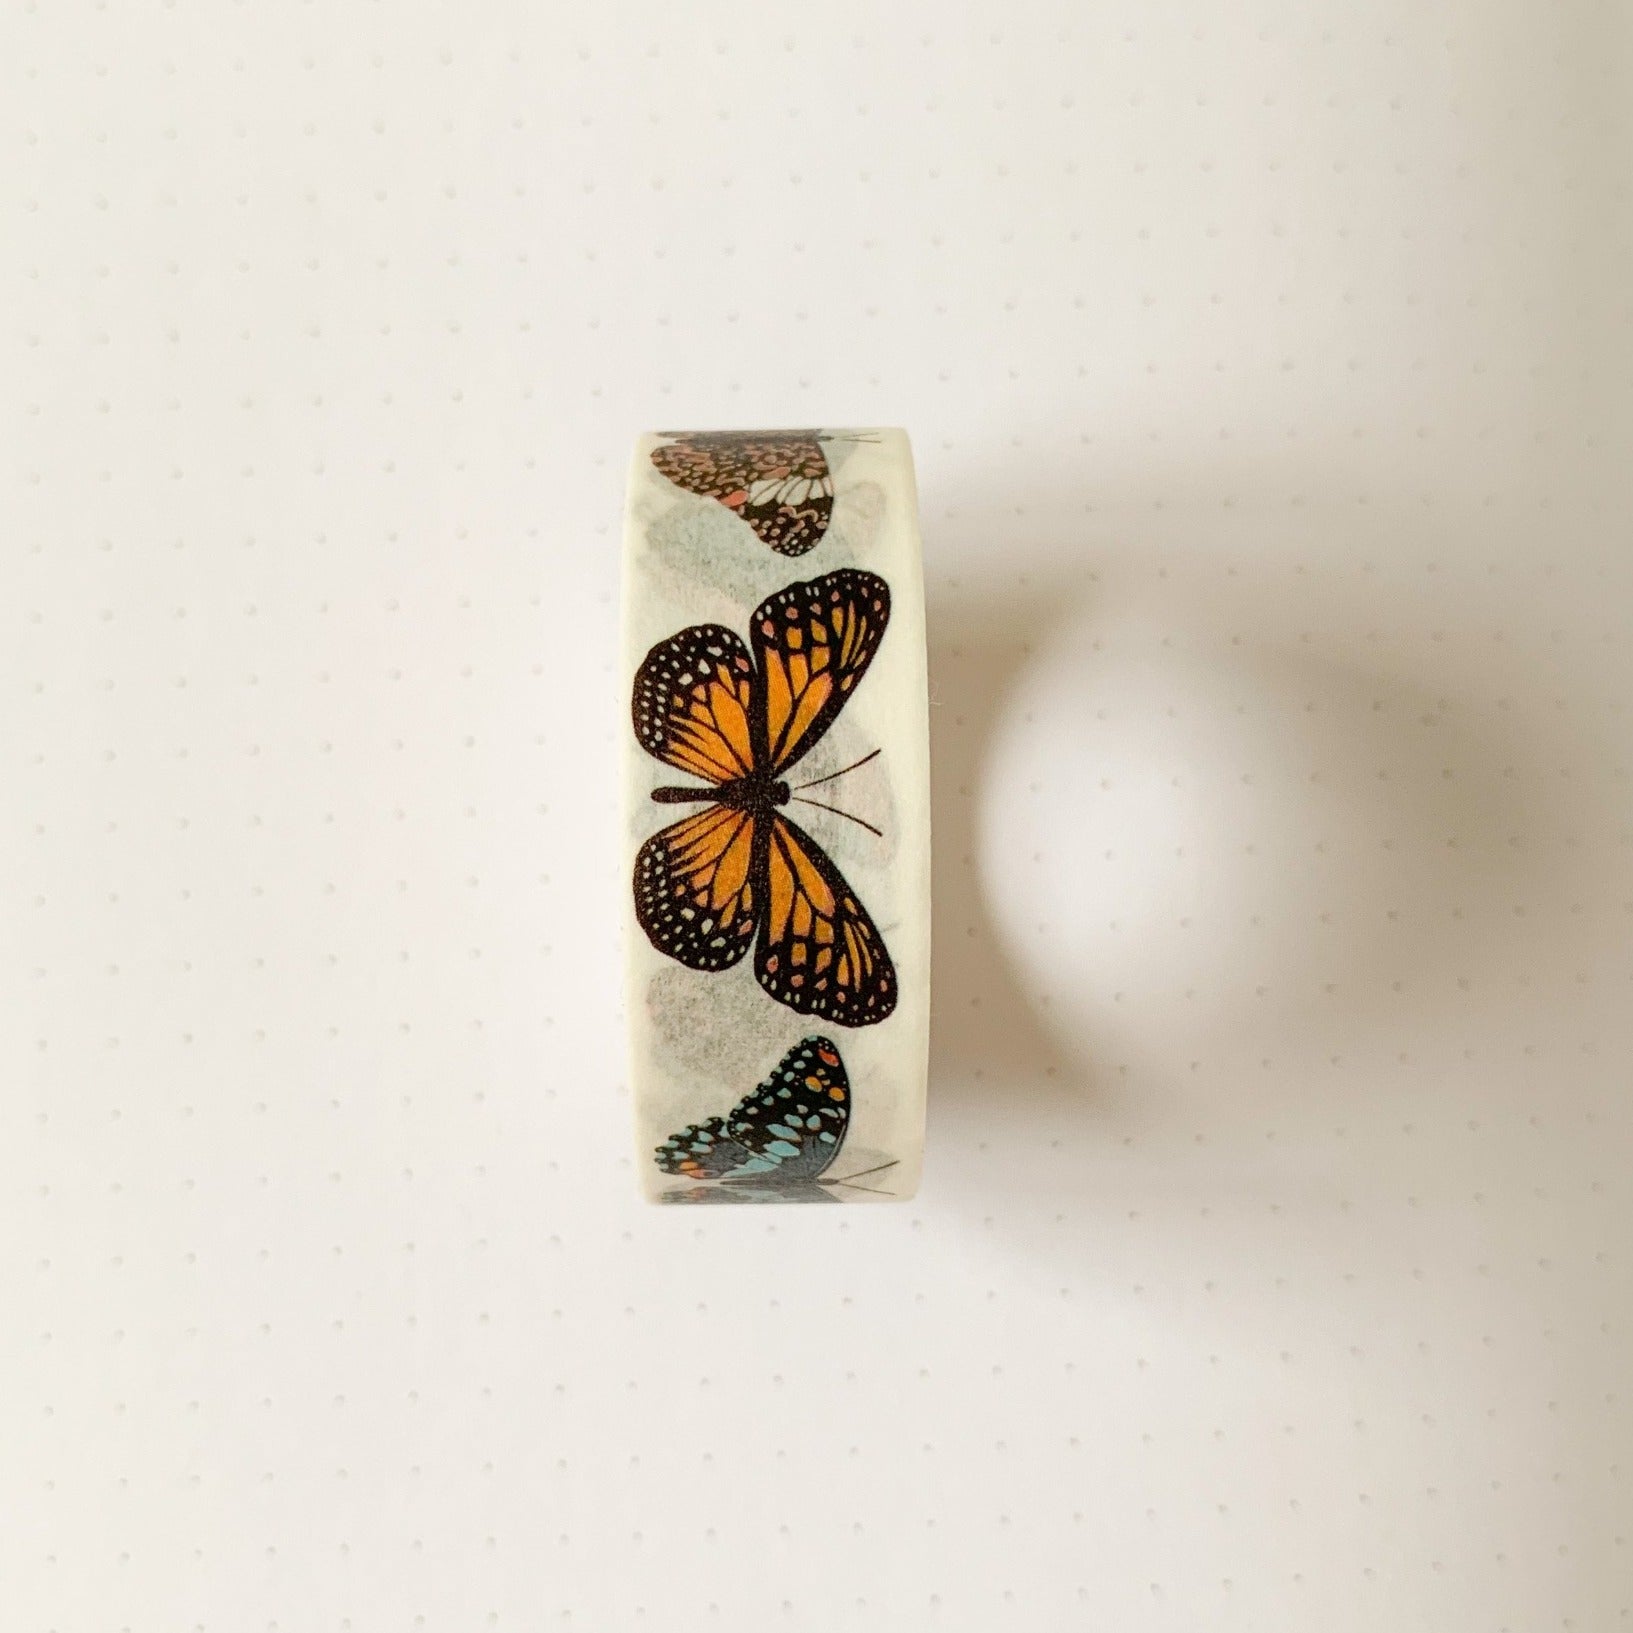 Digital Washi Tape Butterflies Graphic by Sweet Shop Design